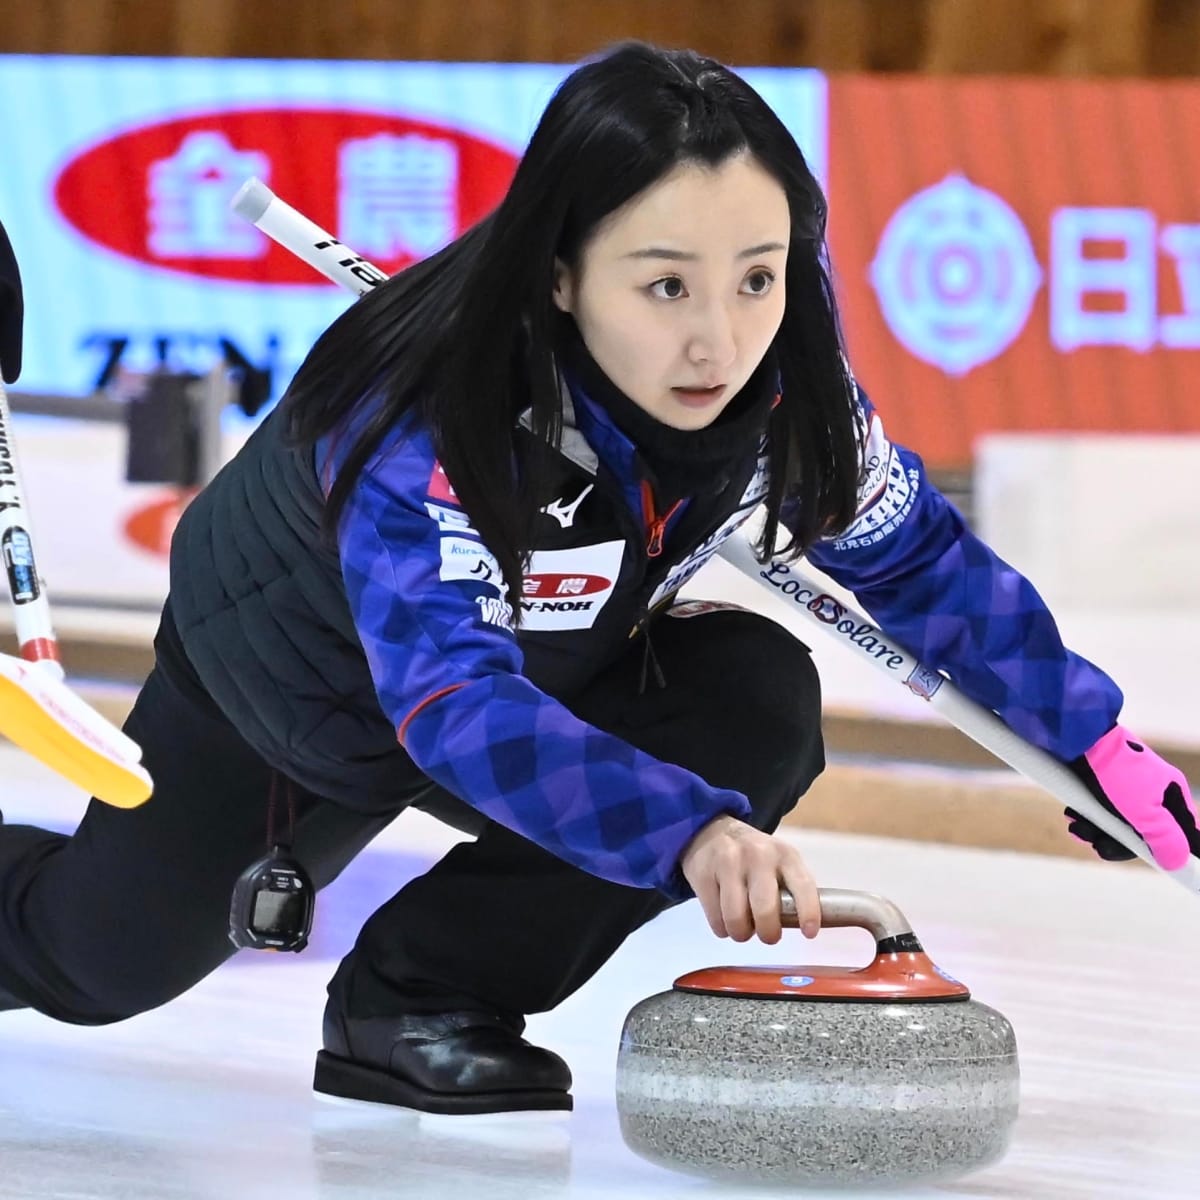 Ready To Roar: Japan Women's Curling Team Looking to Take It Up a